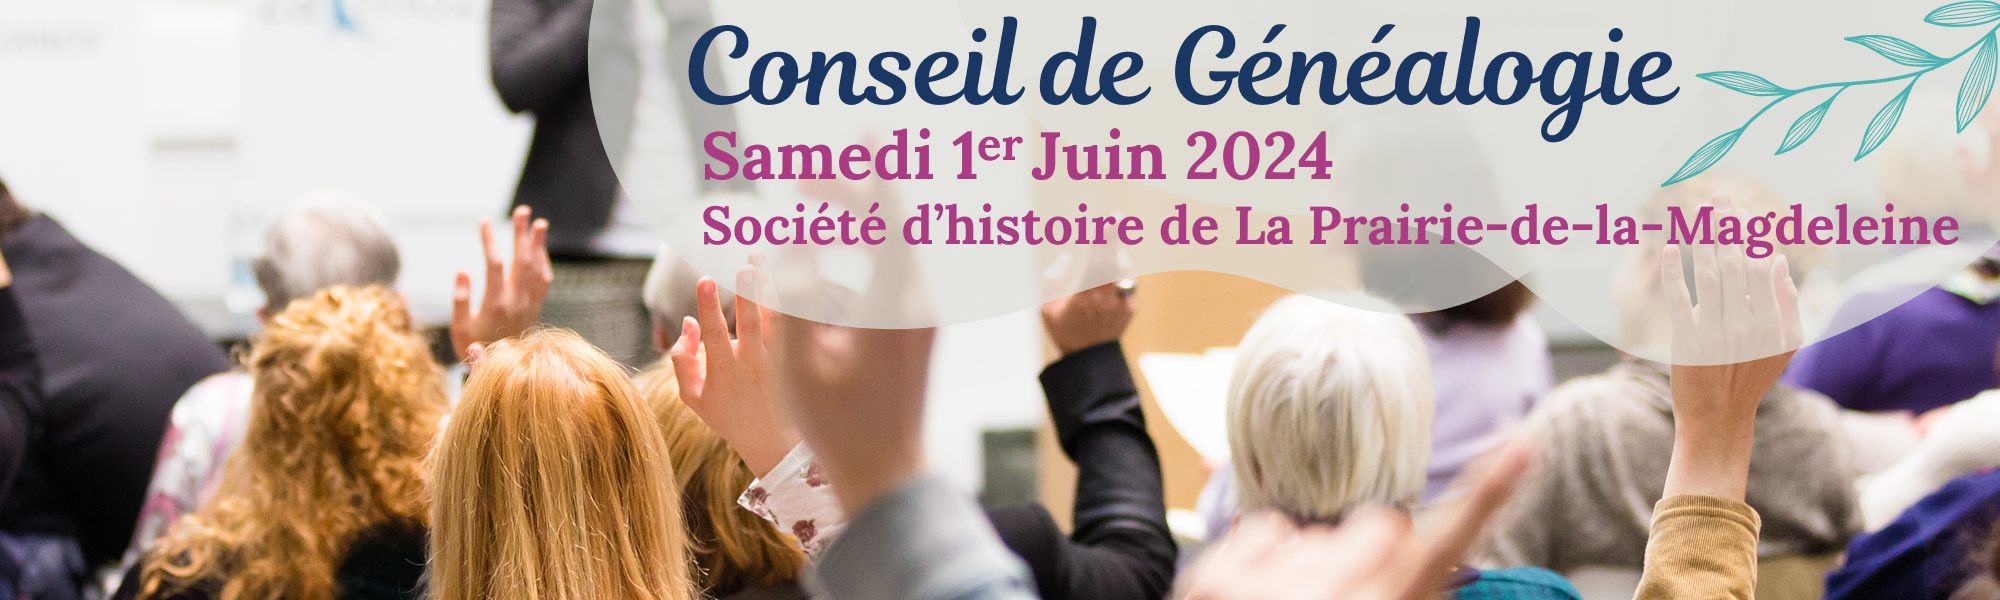 Conseil de Généalogie - Samedi 1er Juin - Société de généalogie de La-Prairie-de-la-Magdeleine